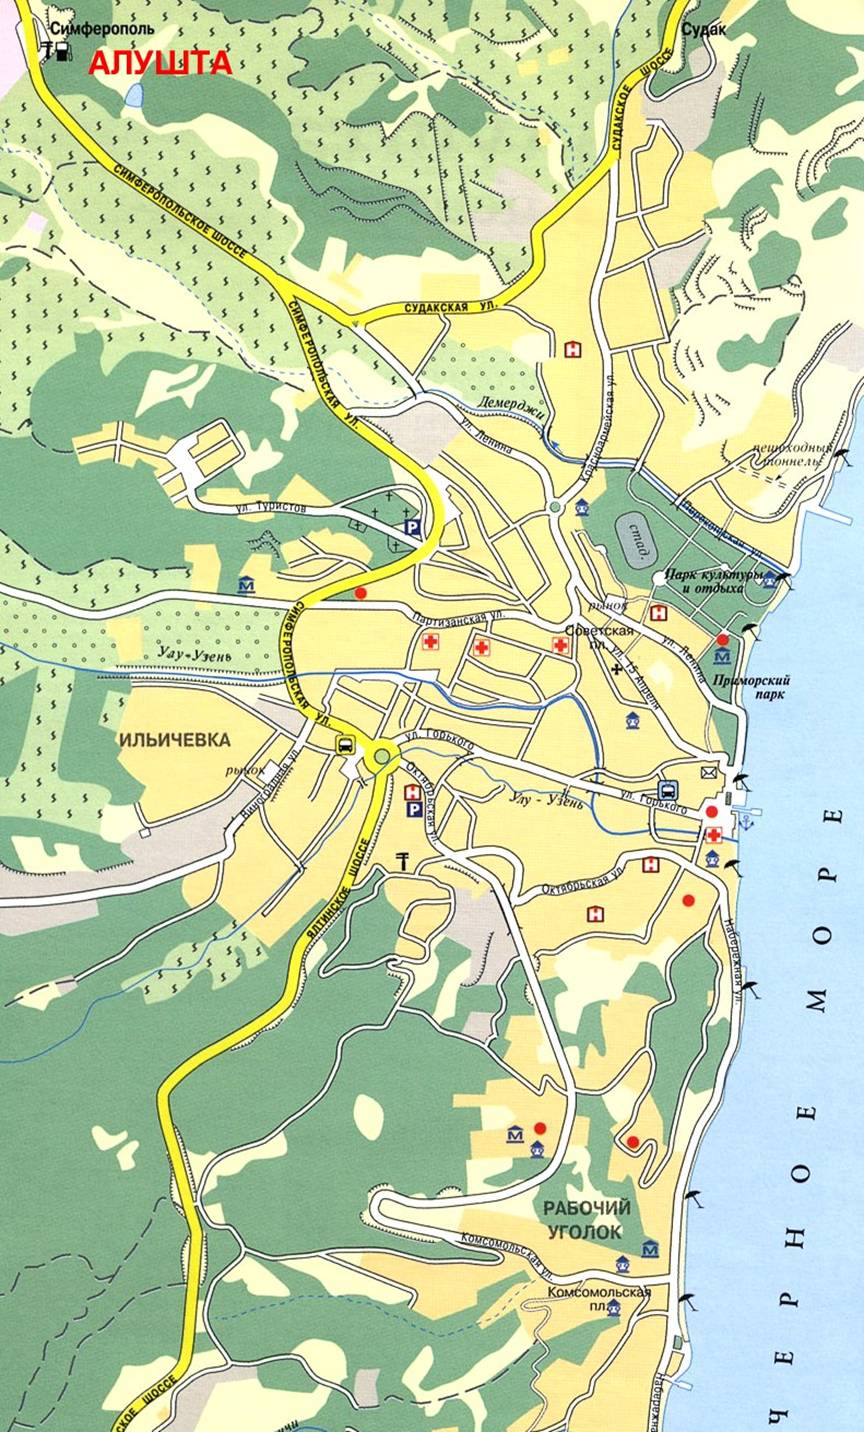 Показать на карте алушту. Алушта карта города с улицами. Алушта карта города. Г Алушта на карте Крыма. Алушта на карте.